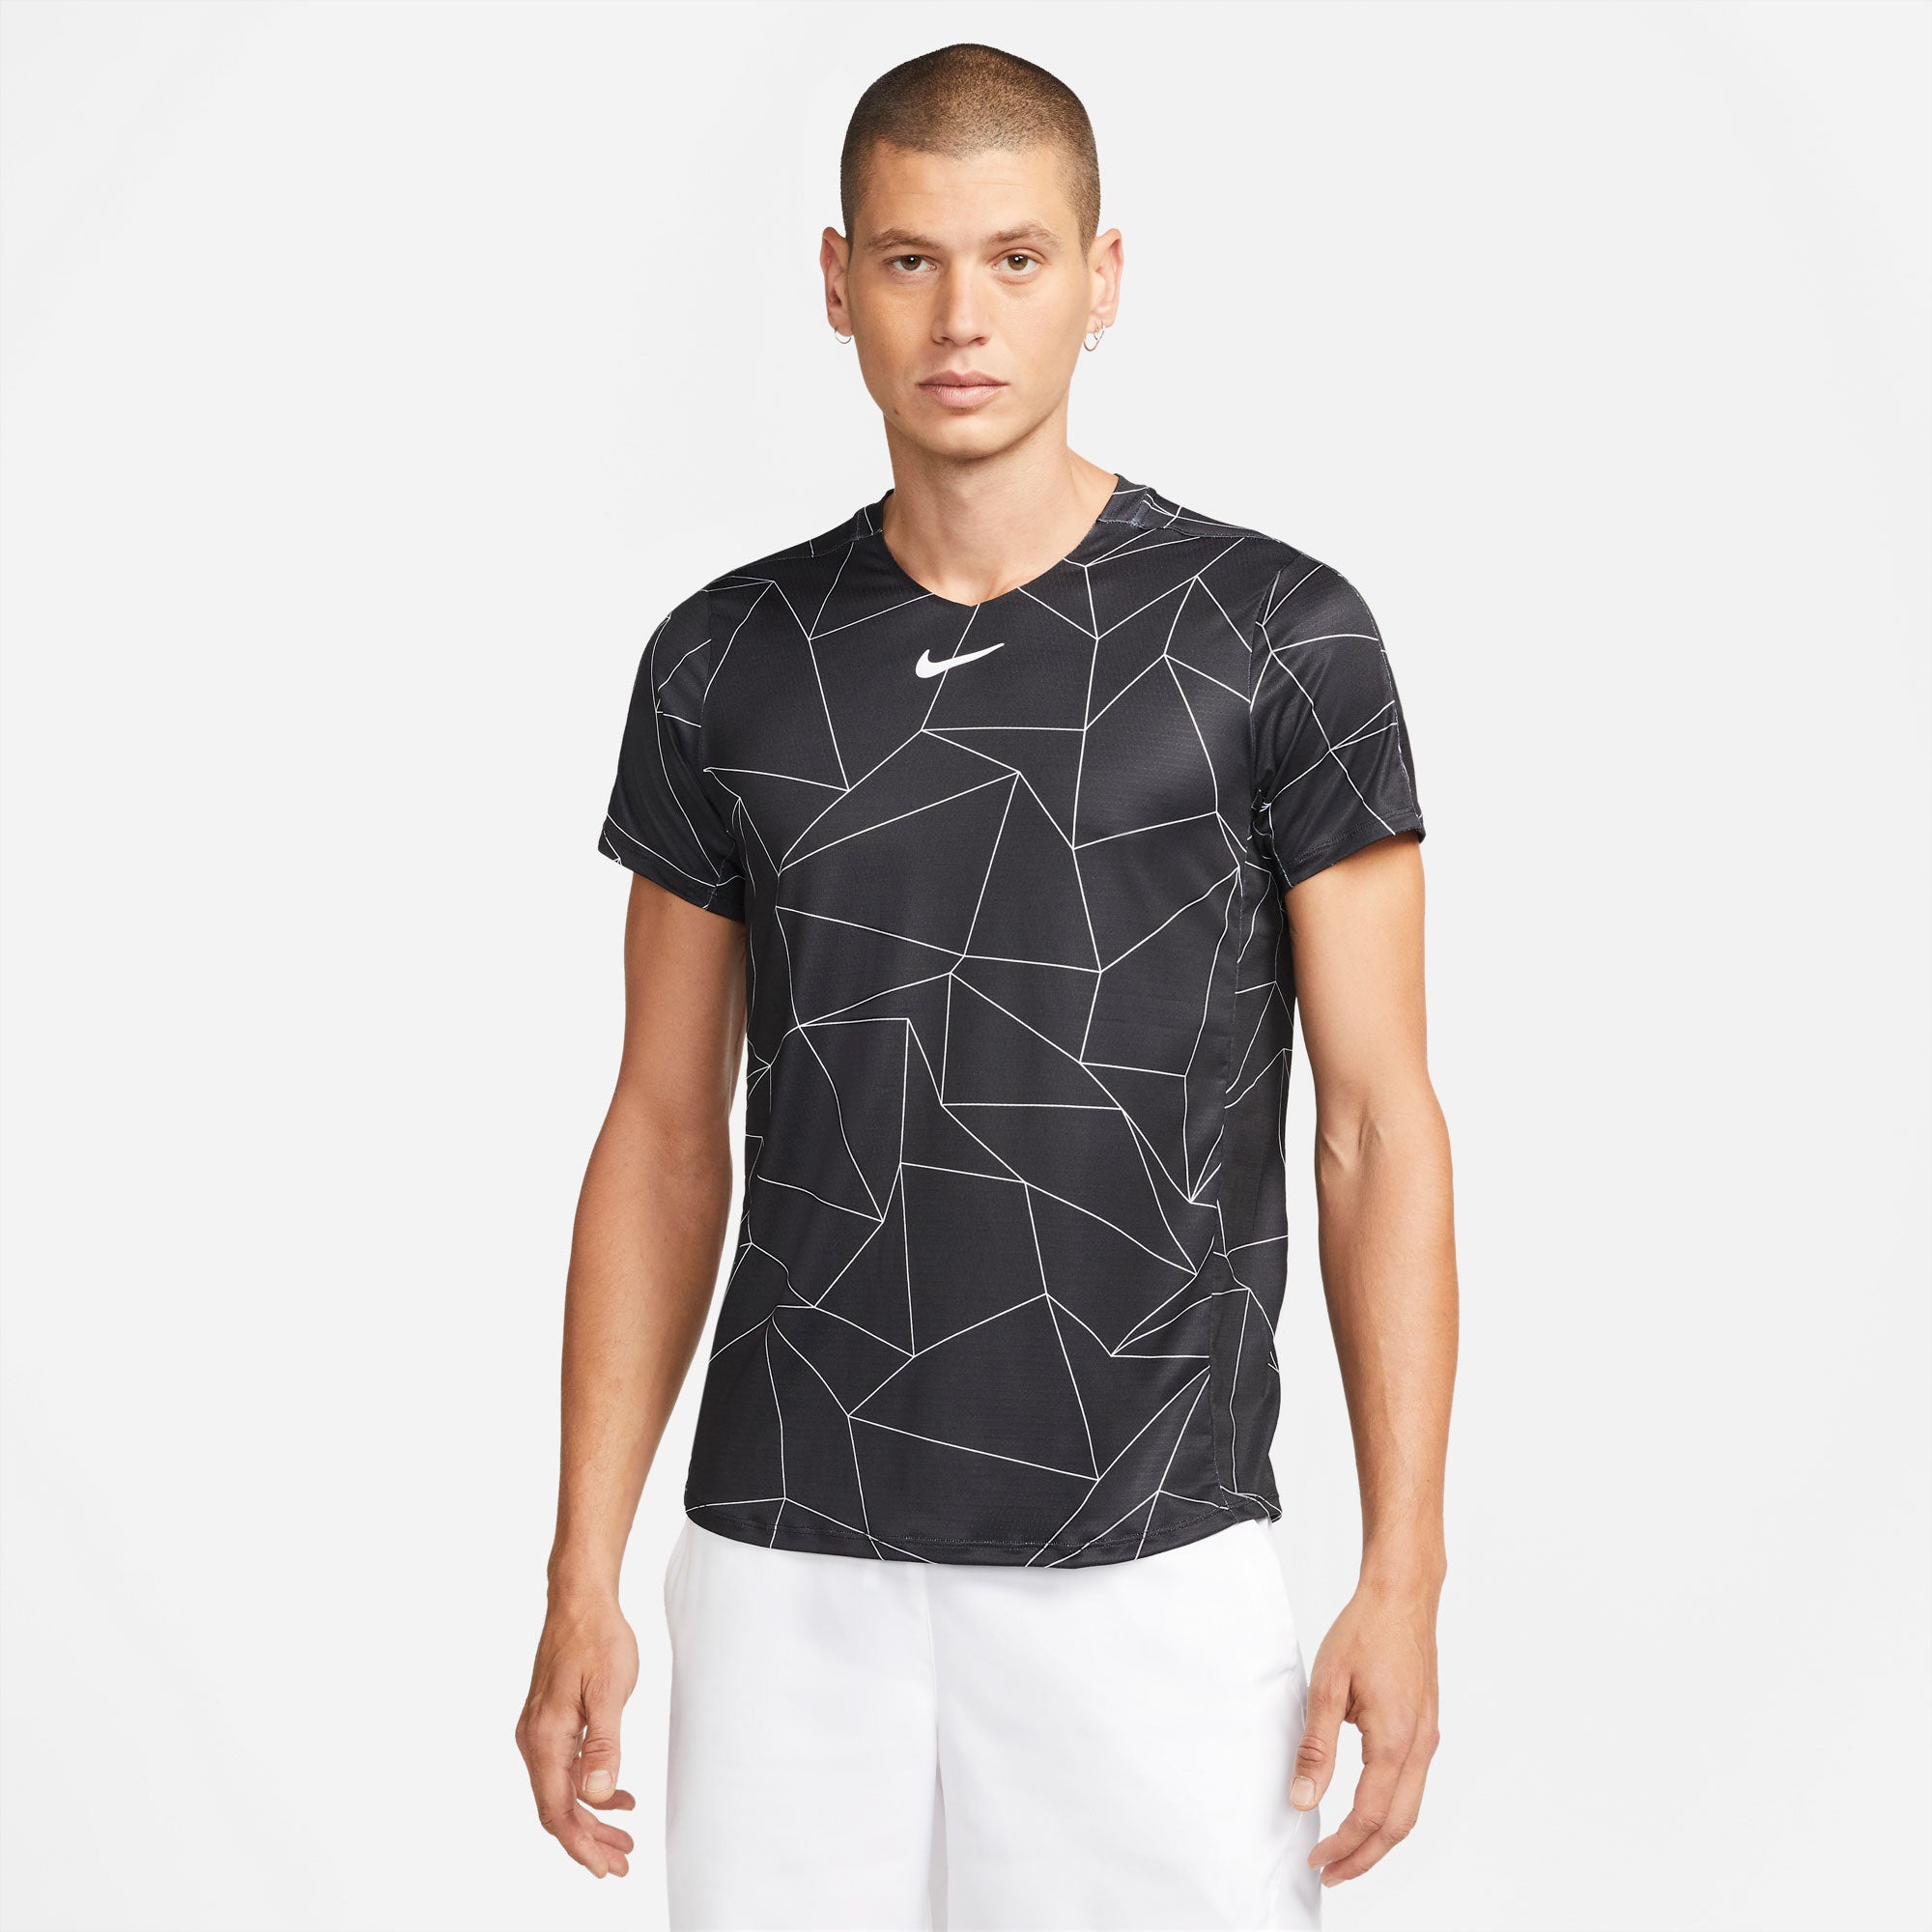 NikeCourt Dri-FIT Advantage Men's Printed Tennis Shirt Black (1)